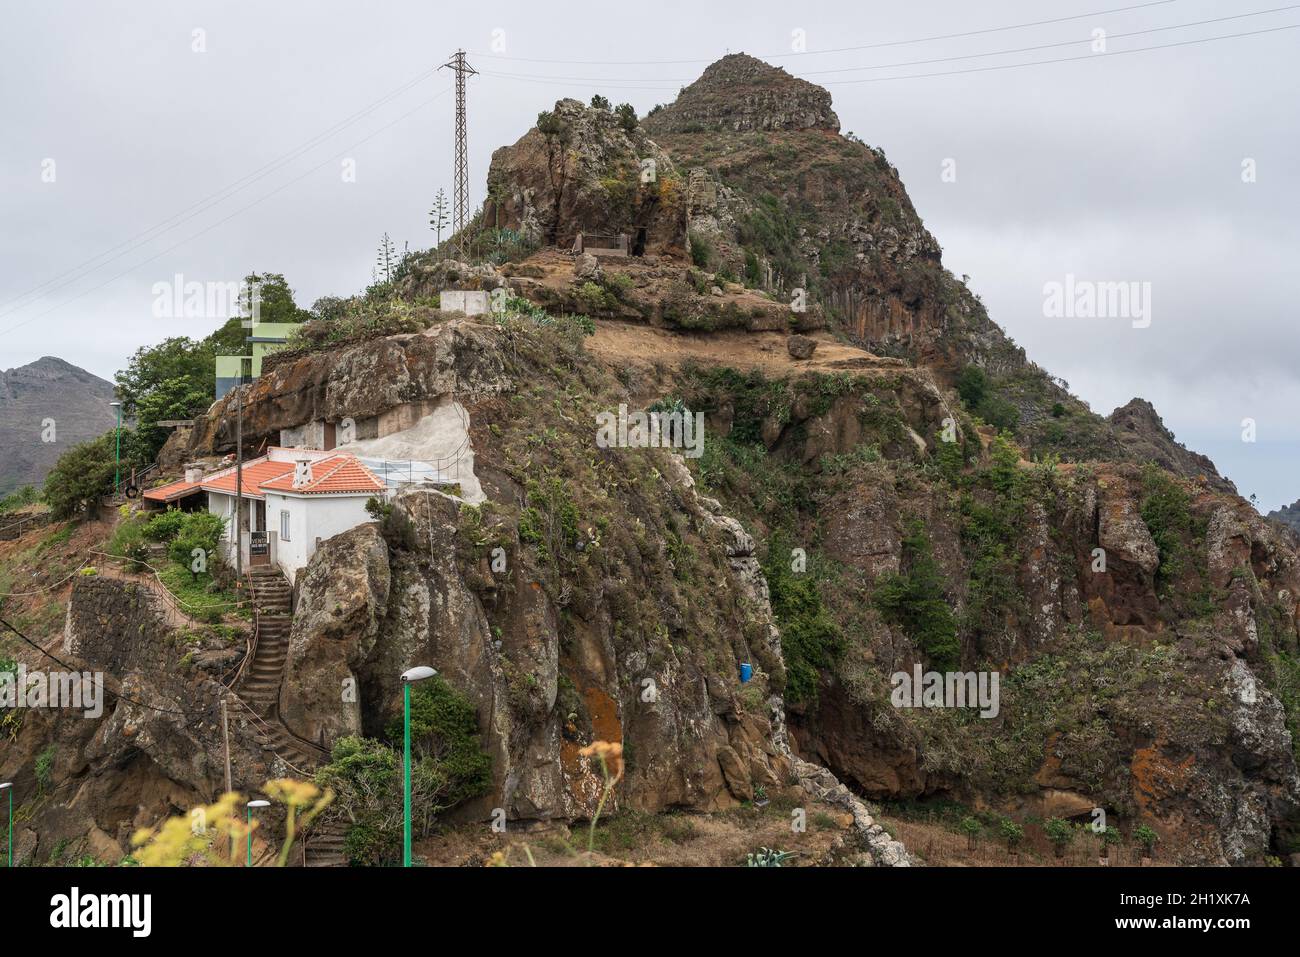 BEJIA, CANARY ISLANDS - JULY 06, 2021: House on the rocks. The mountain village of Bejia. Stock Photo